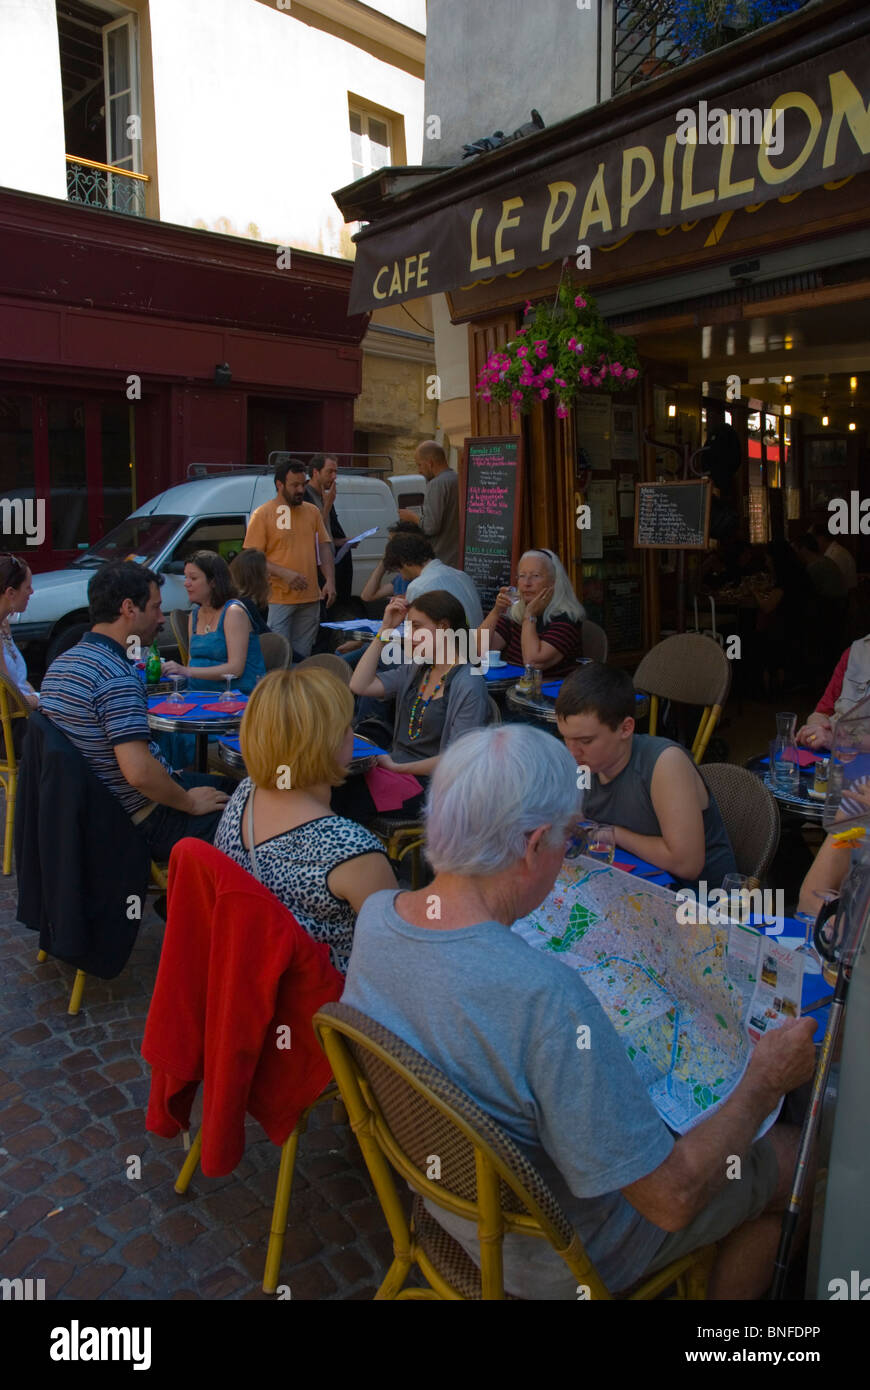 Cafe restaurant terrace Rue Mouffetard street Latin Quarter Paris France Europe Stock Photo